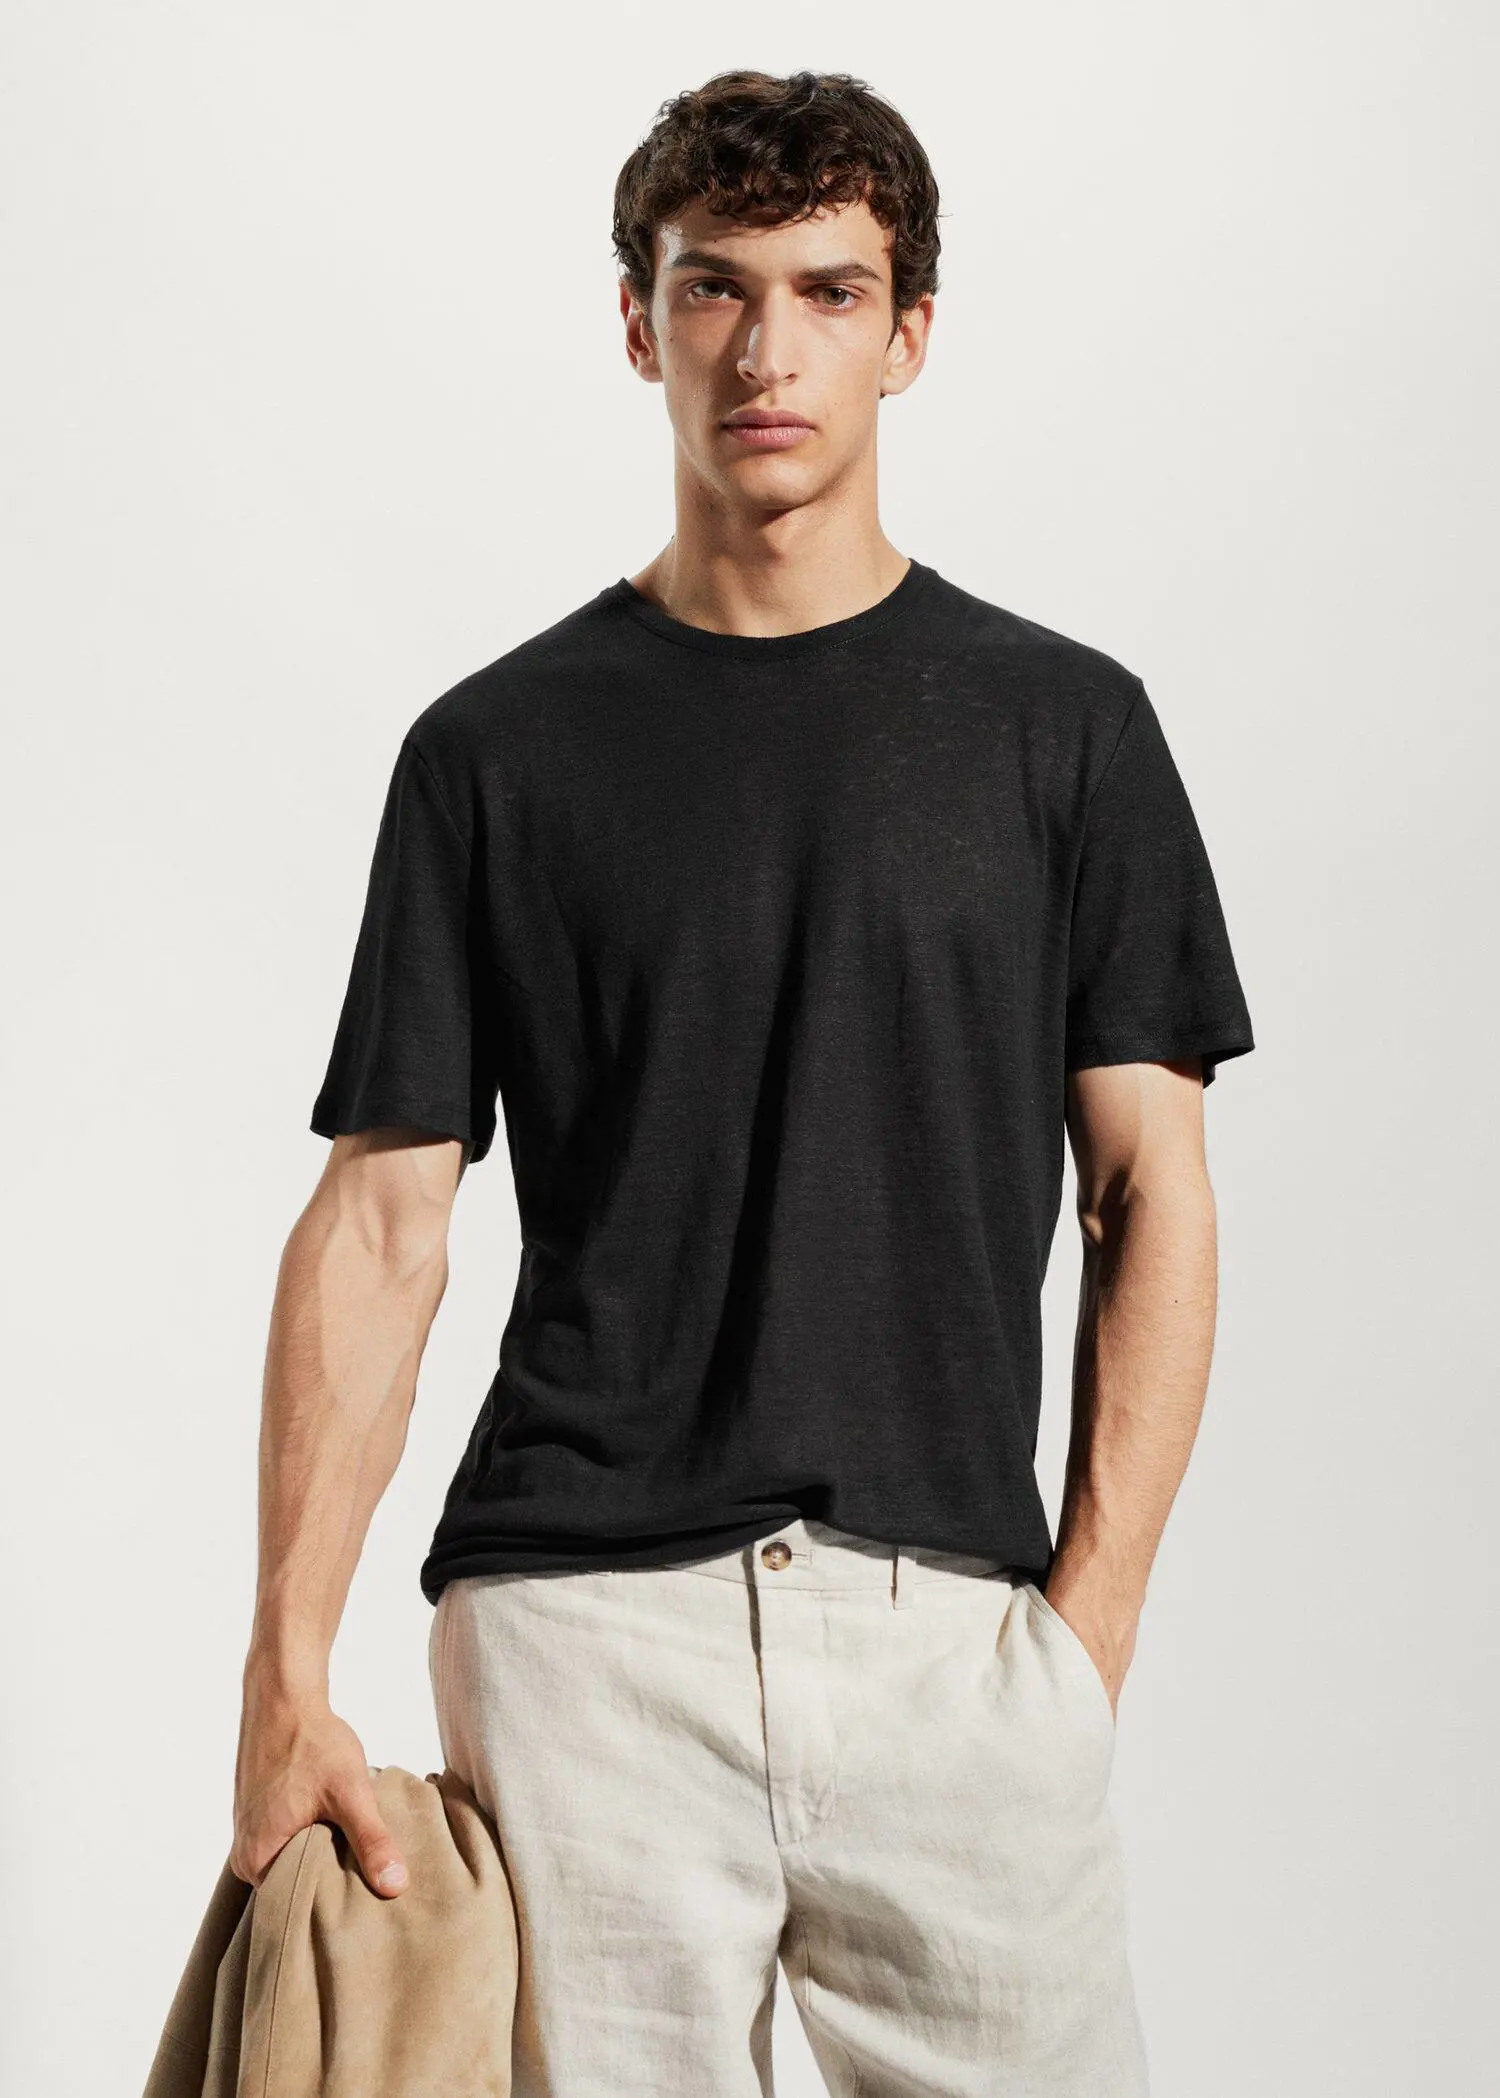 Mango 100% linen slim-fit t-shirt. a man wearing a black shirt and white pants. 